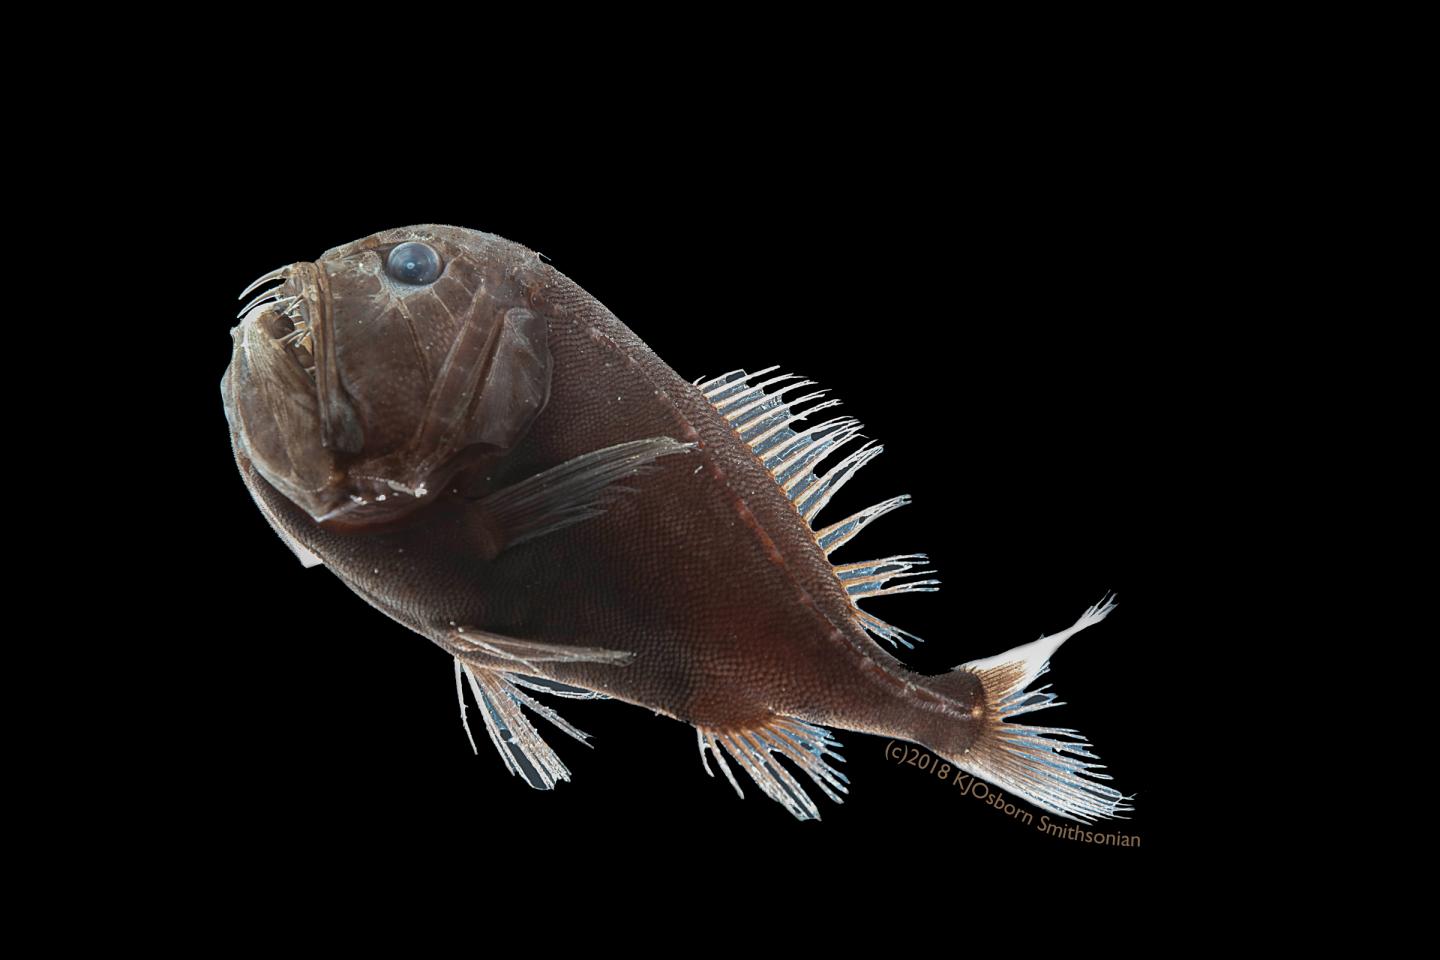 One Specimen of the Ultra-Black Fish Species Anoplogaster cornuta